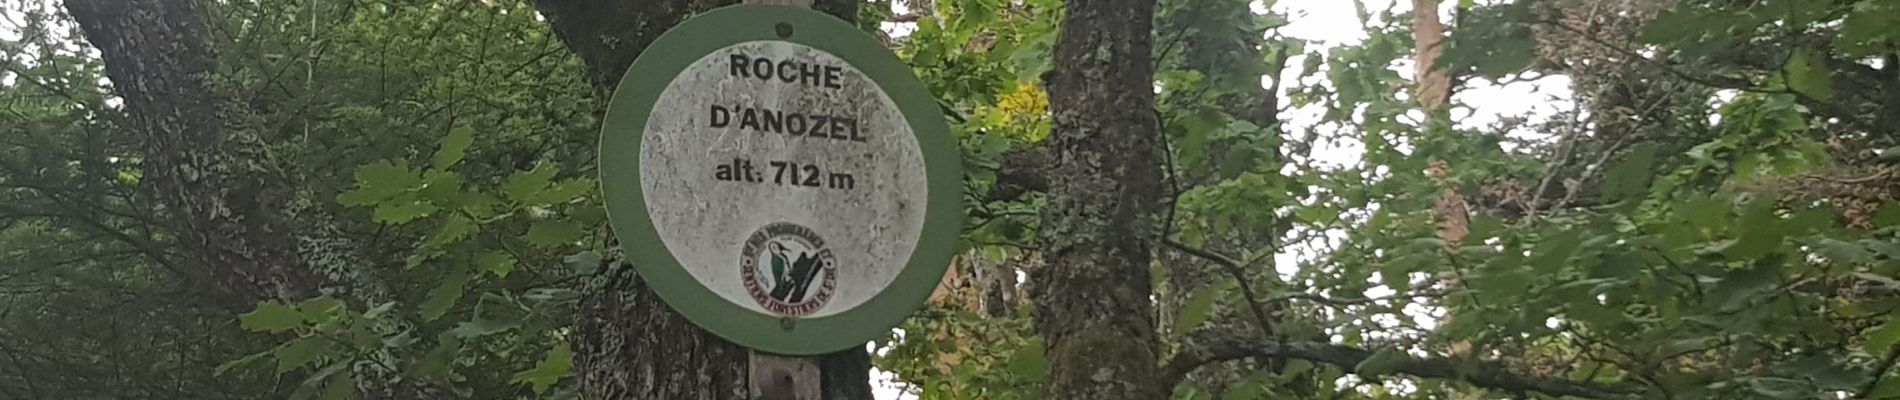 Trail Trail Taintrux - 2020 08 16  Roche d'Anozel  - Photo